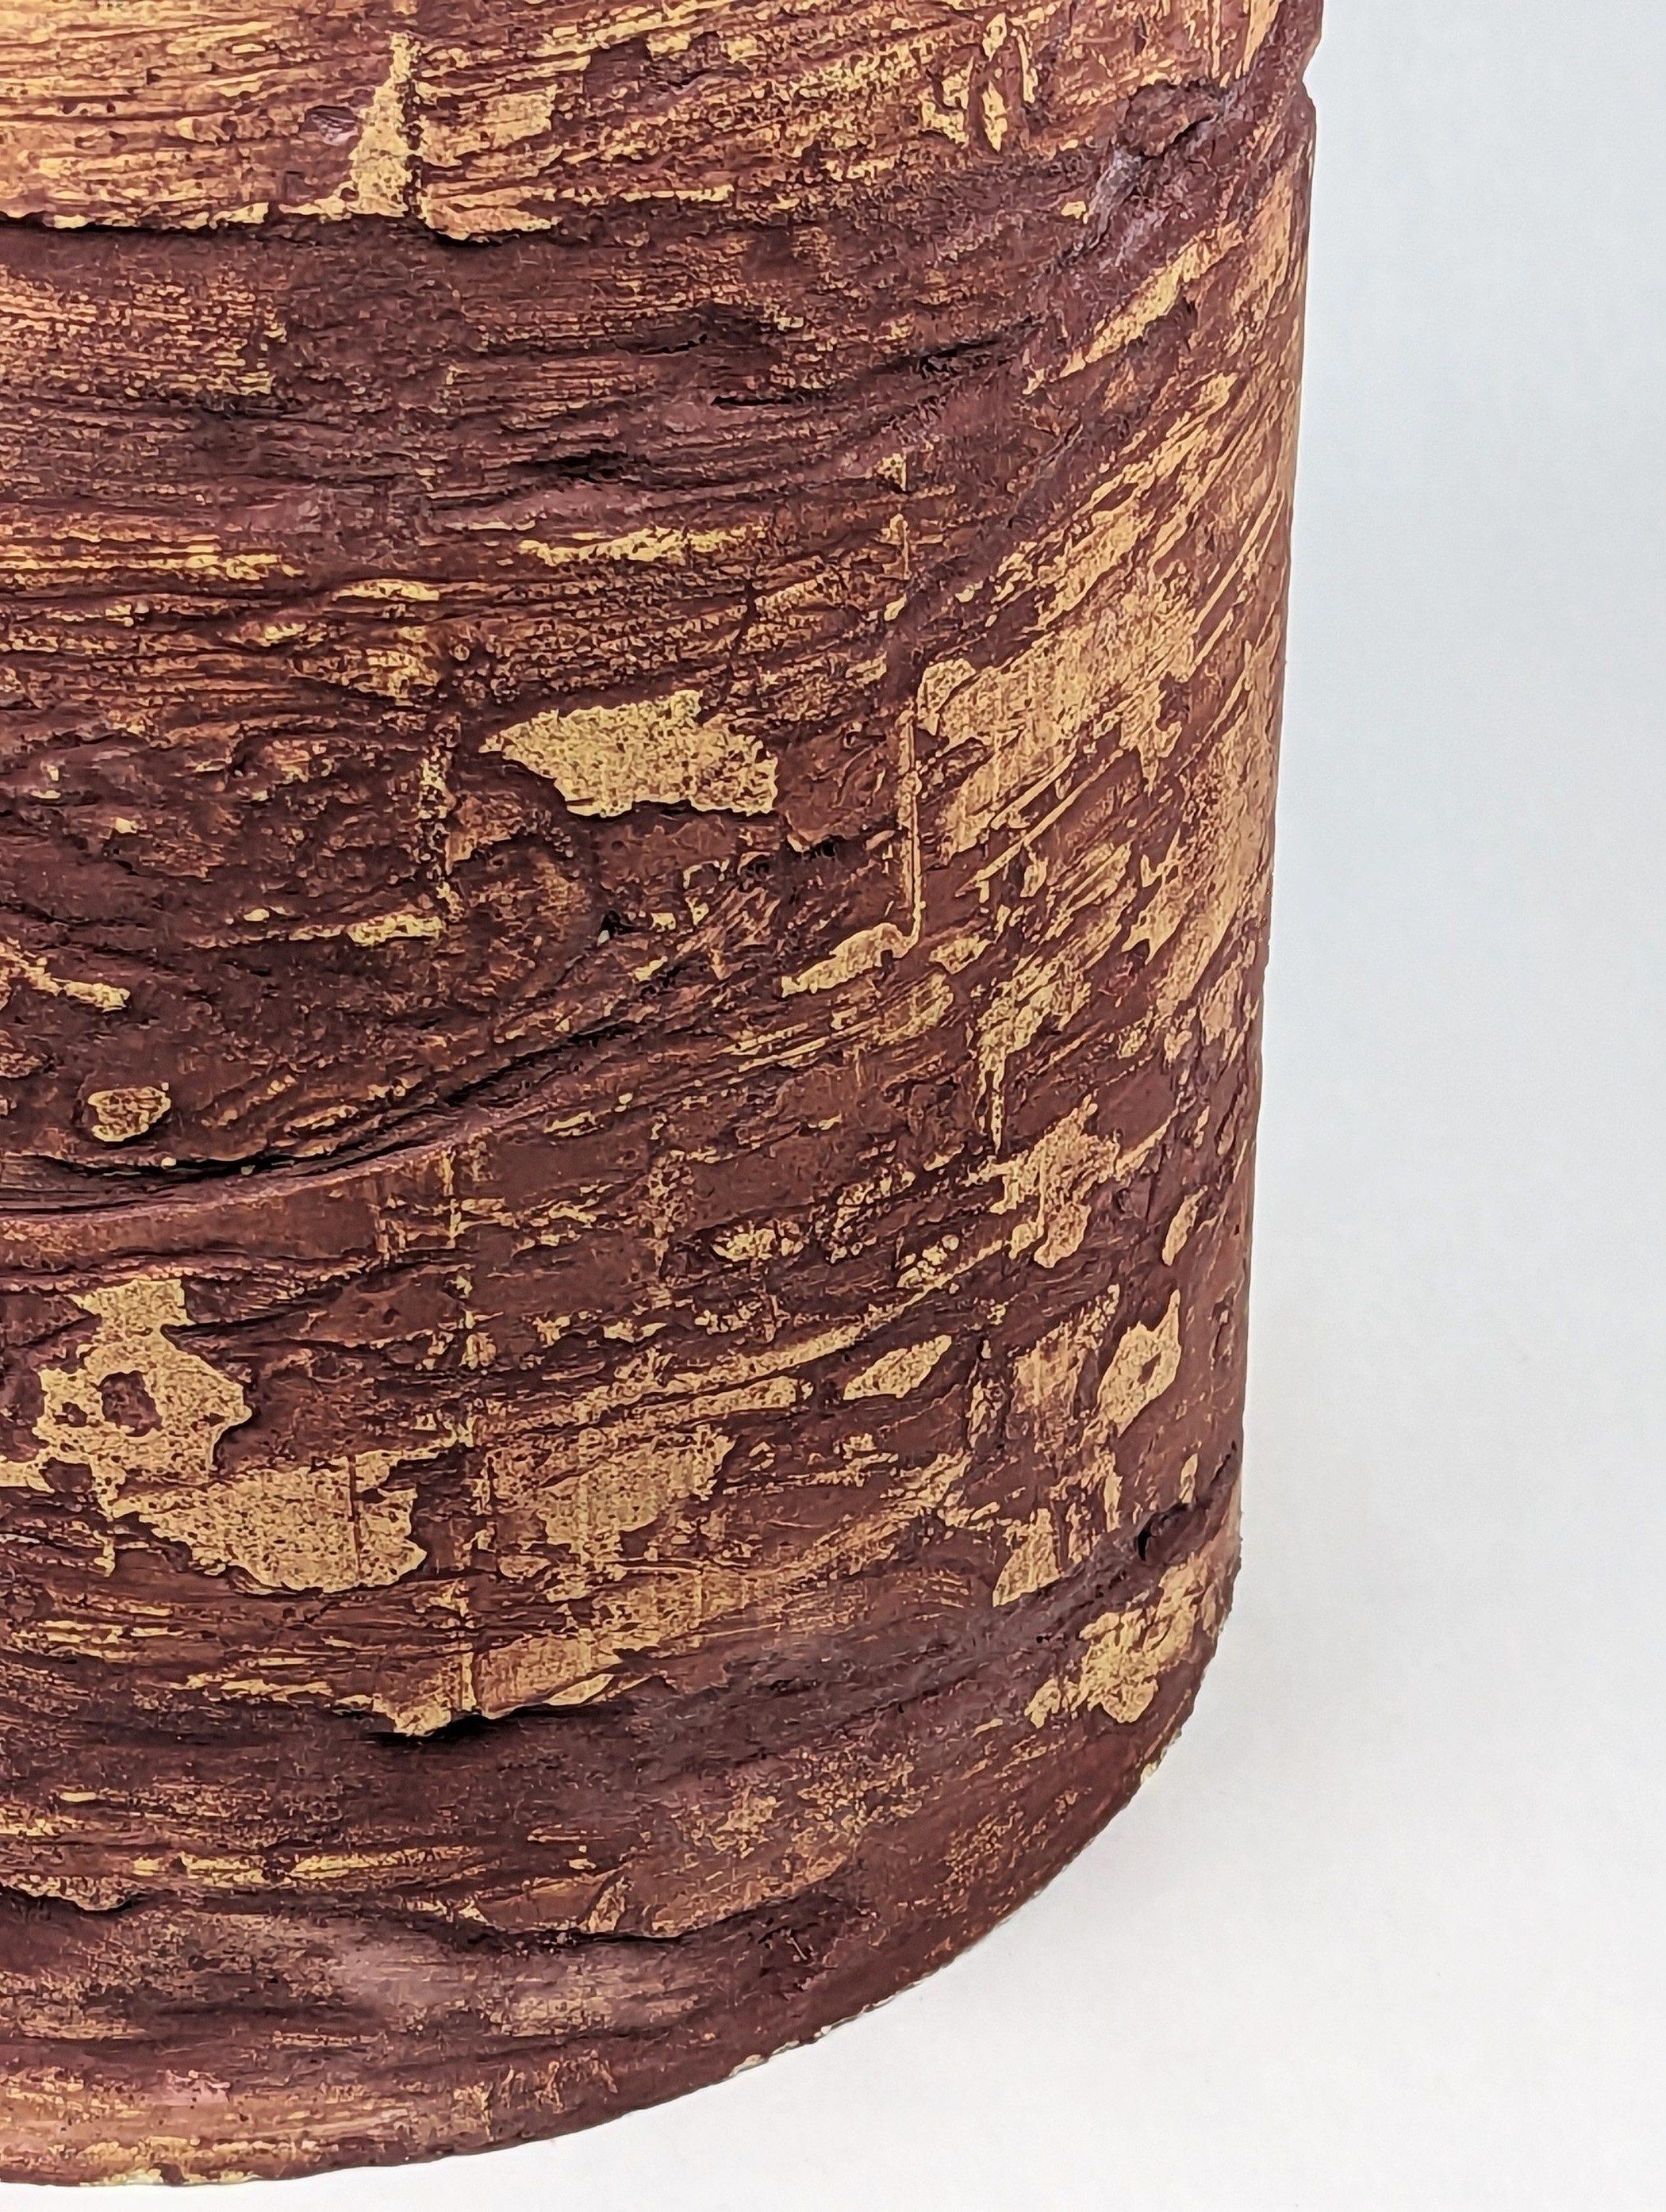 American Dark Purple Palm Textured Concrete Stool, 'Caput Mortuum' For Sale